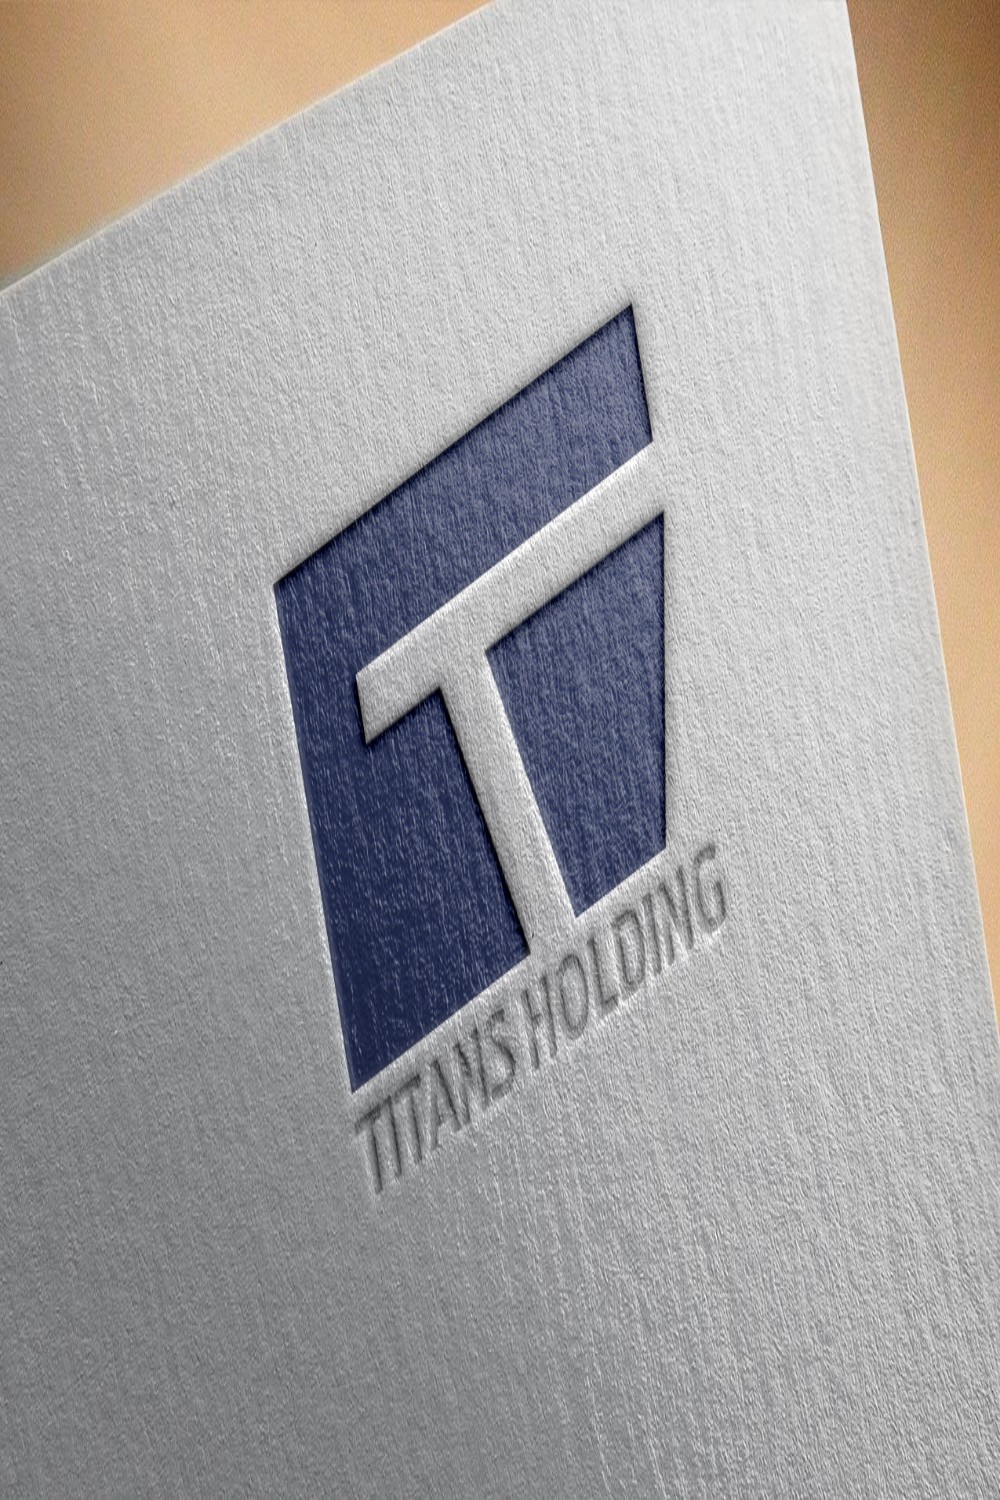 Titans Holding Logo Design pinterest image.